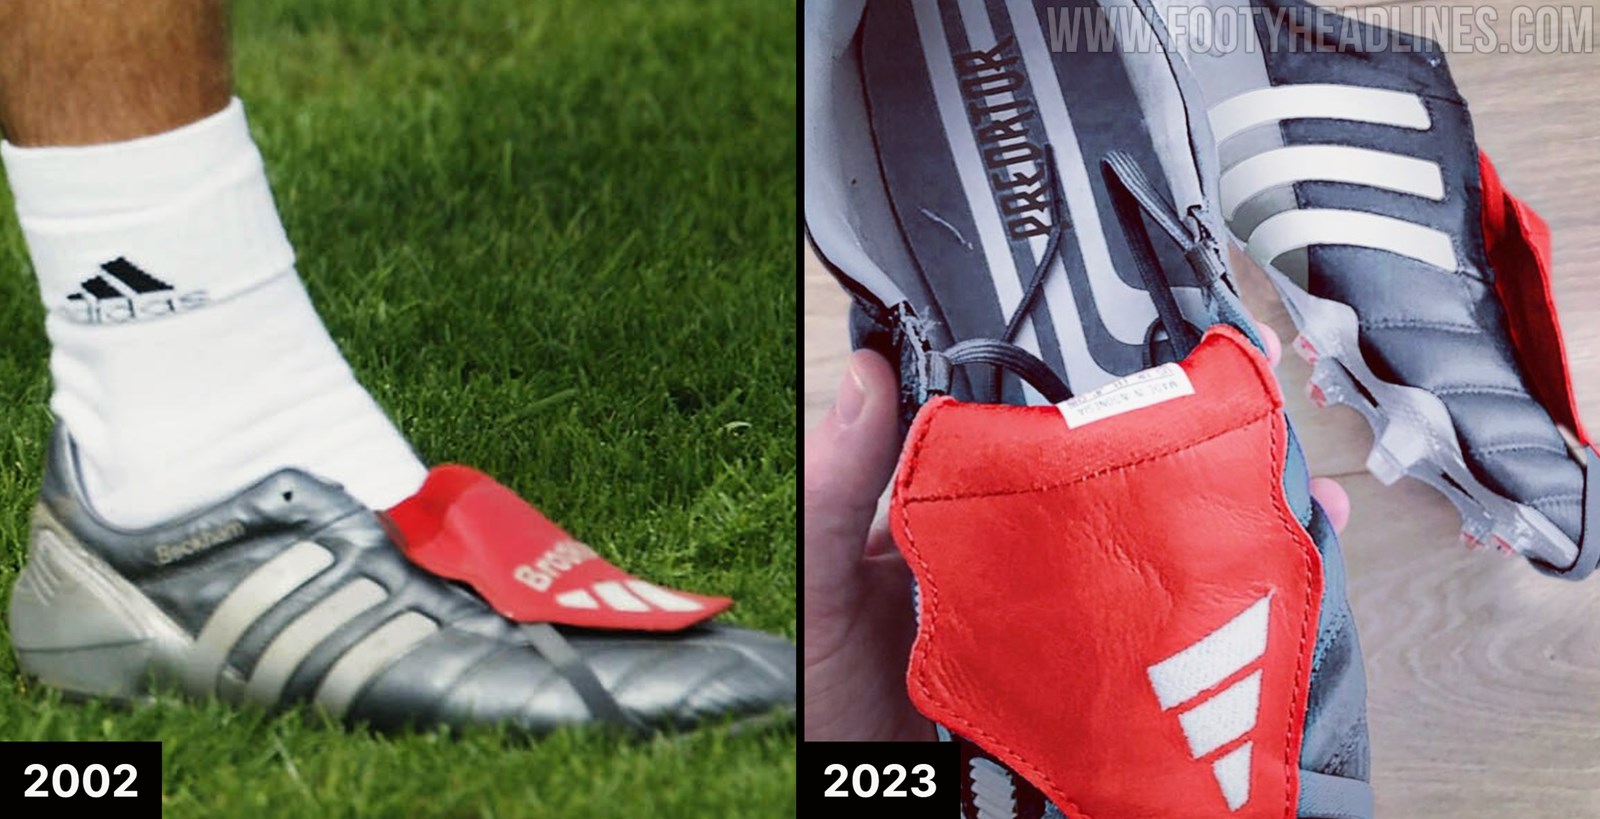 Adidas Predator Mania "Gunmetal" 2023 Remake Boots April Fool's Joke - Footy Headlines